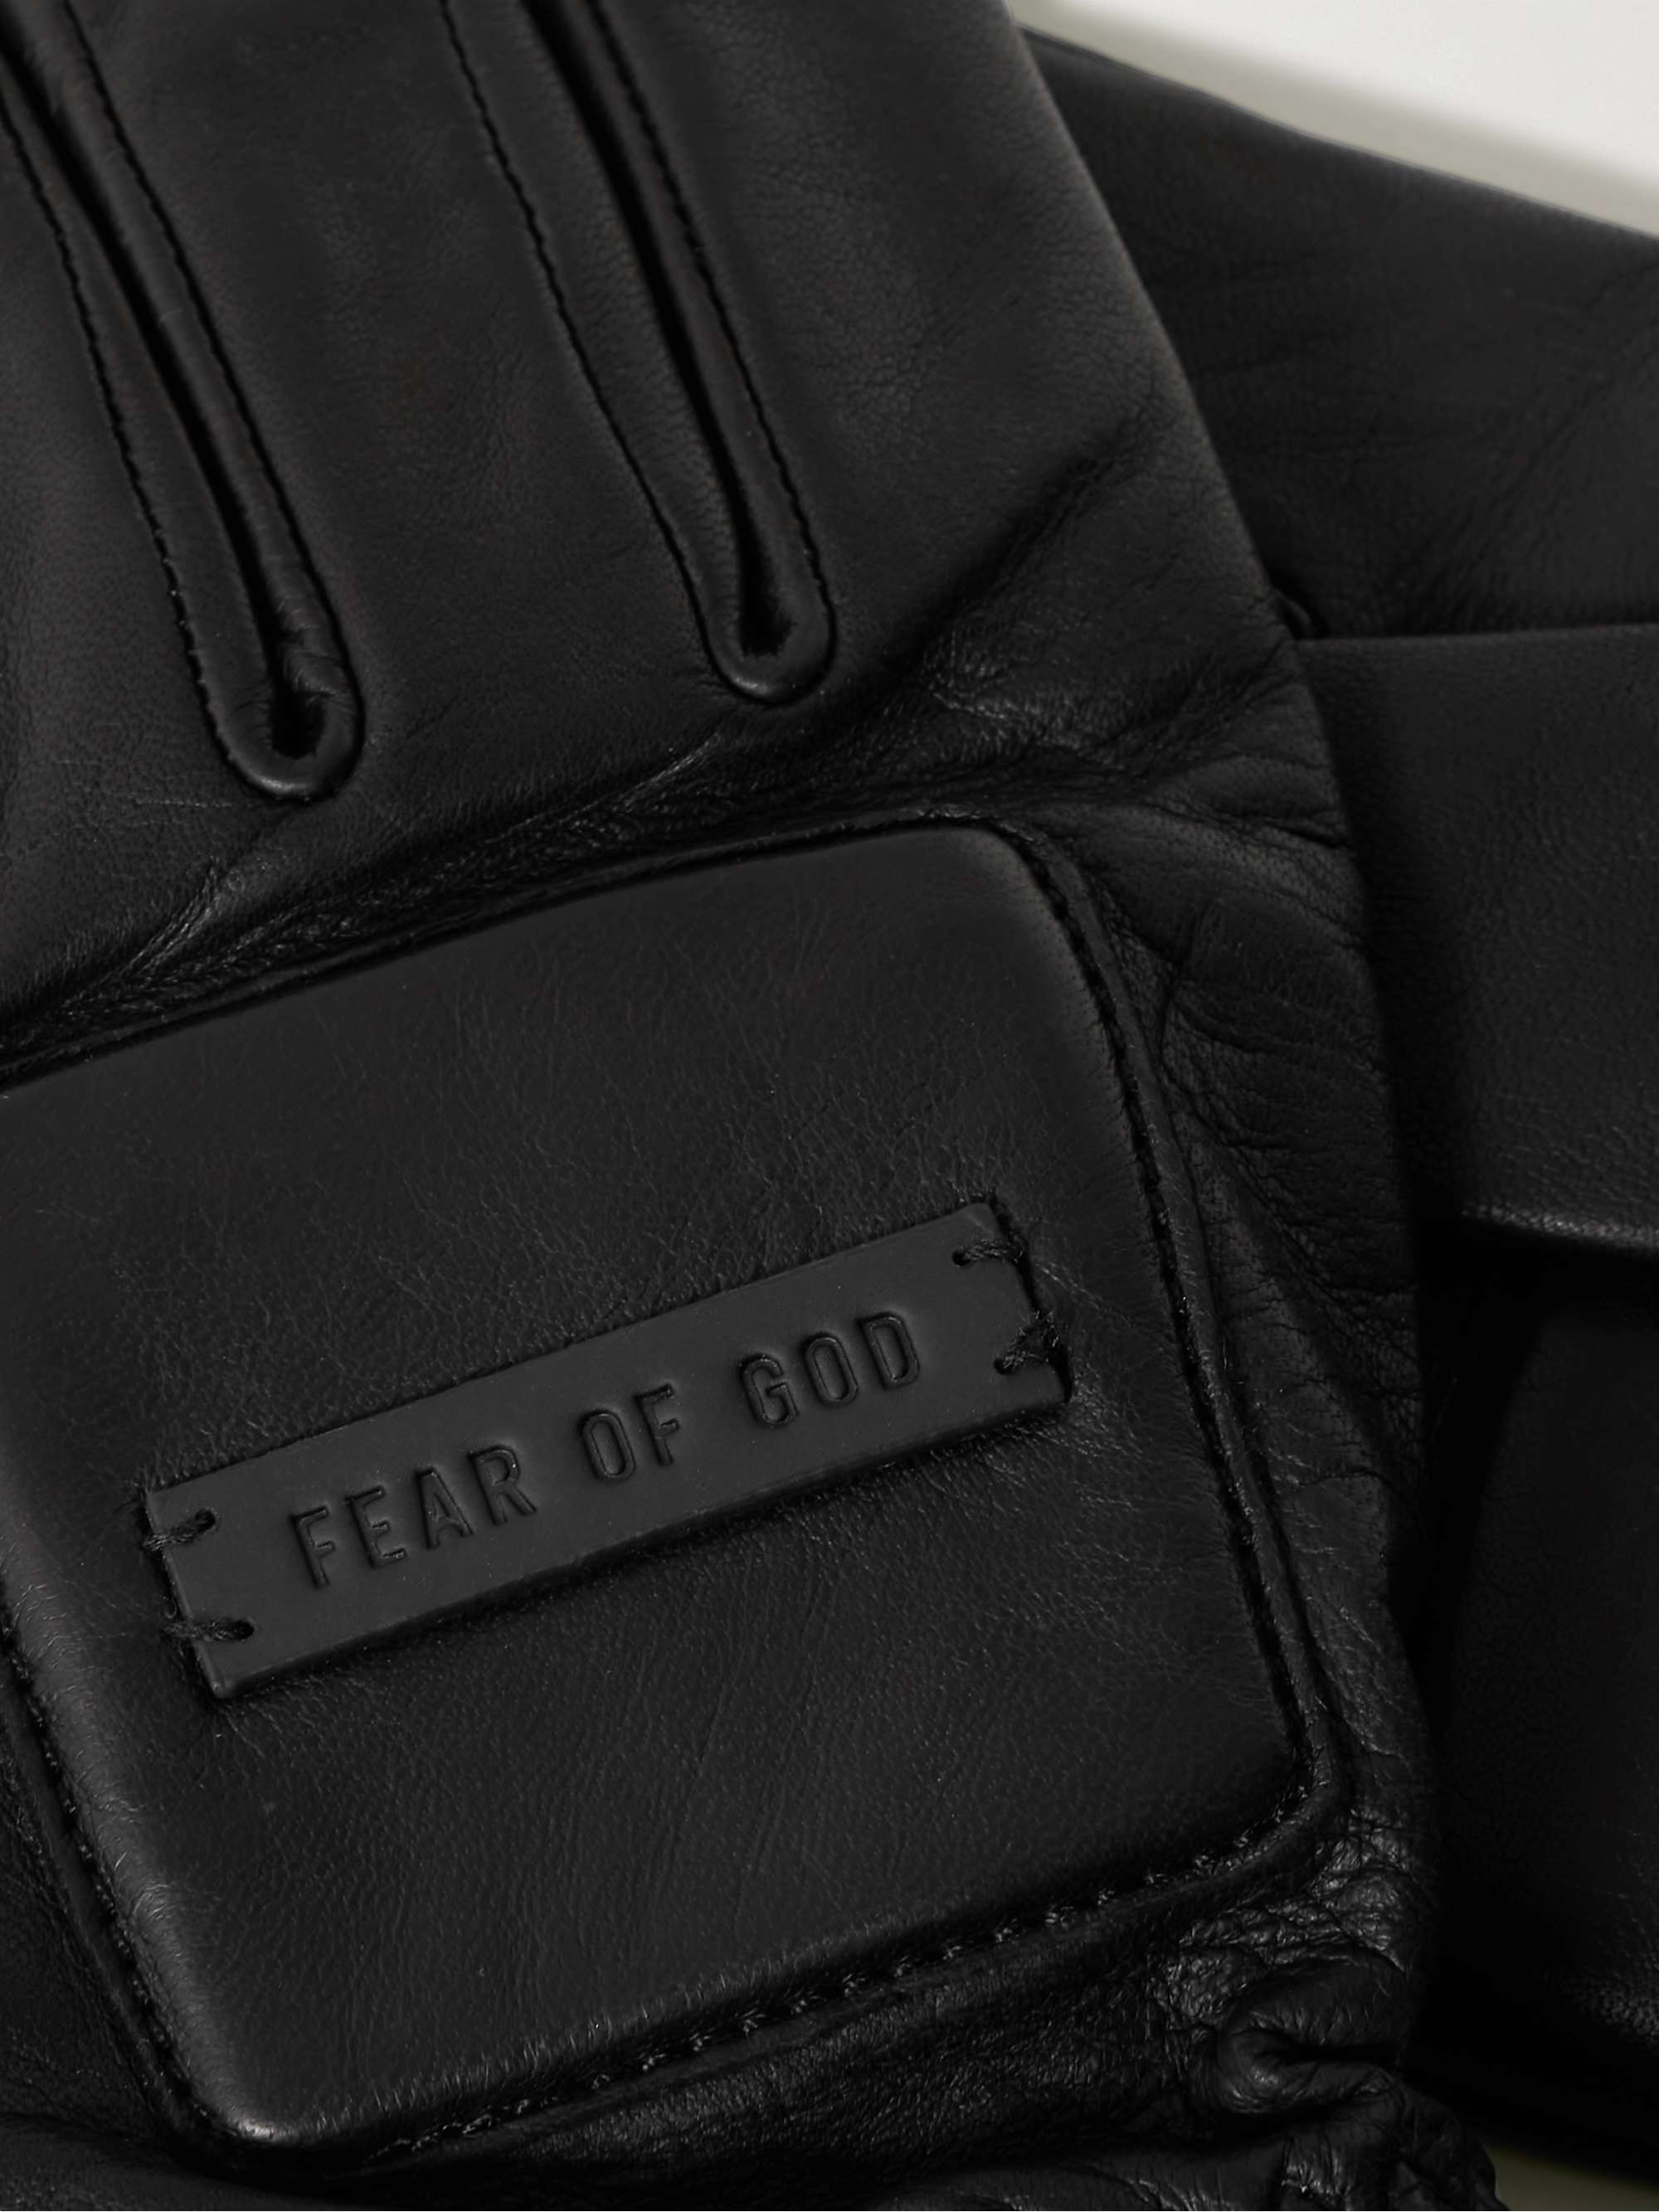 FEAR OF GOD 